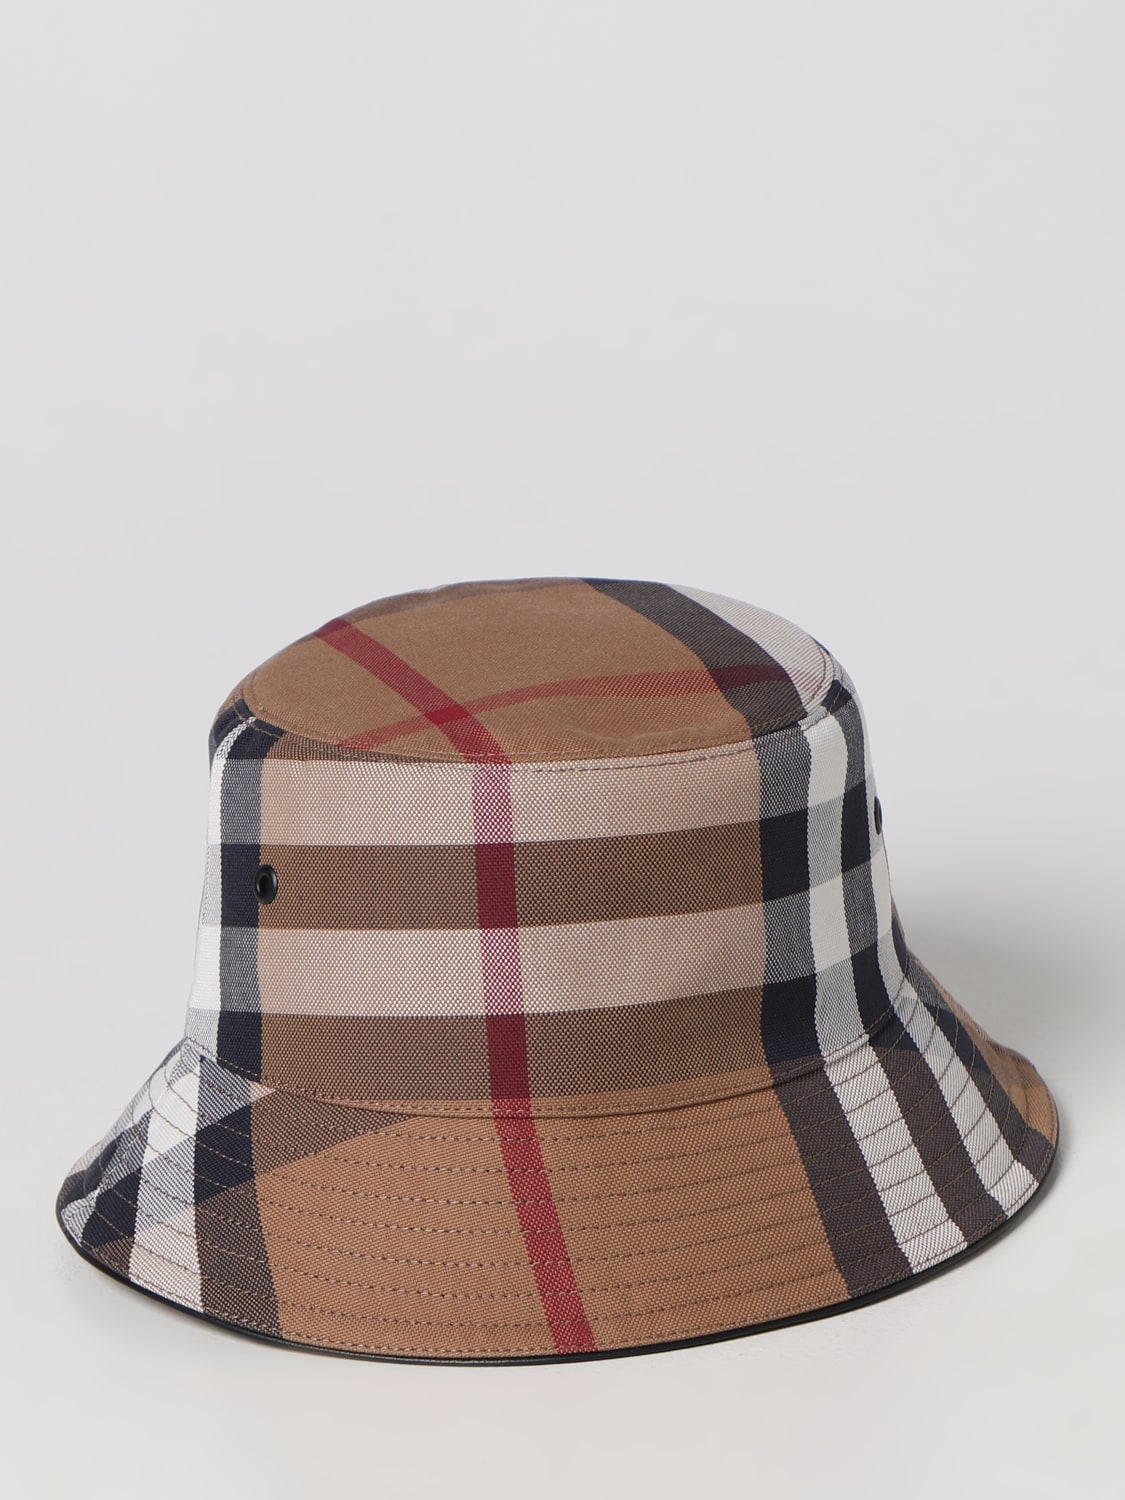 Burberry Check Cotton Bucket Hat in Metallic for Men